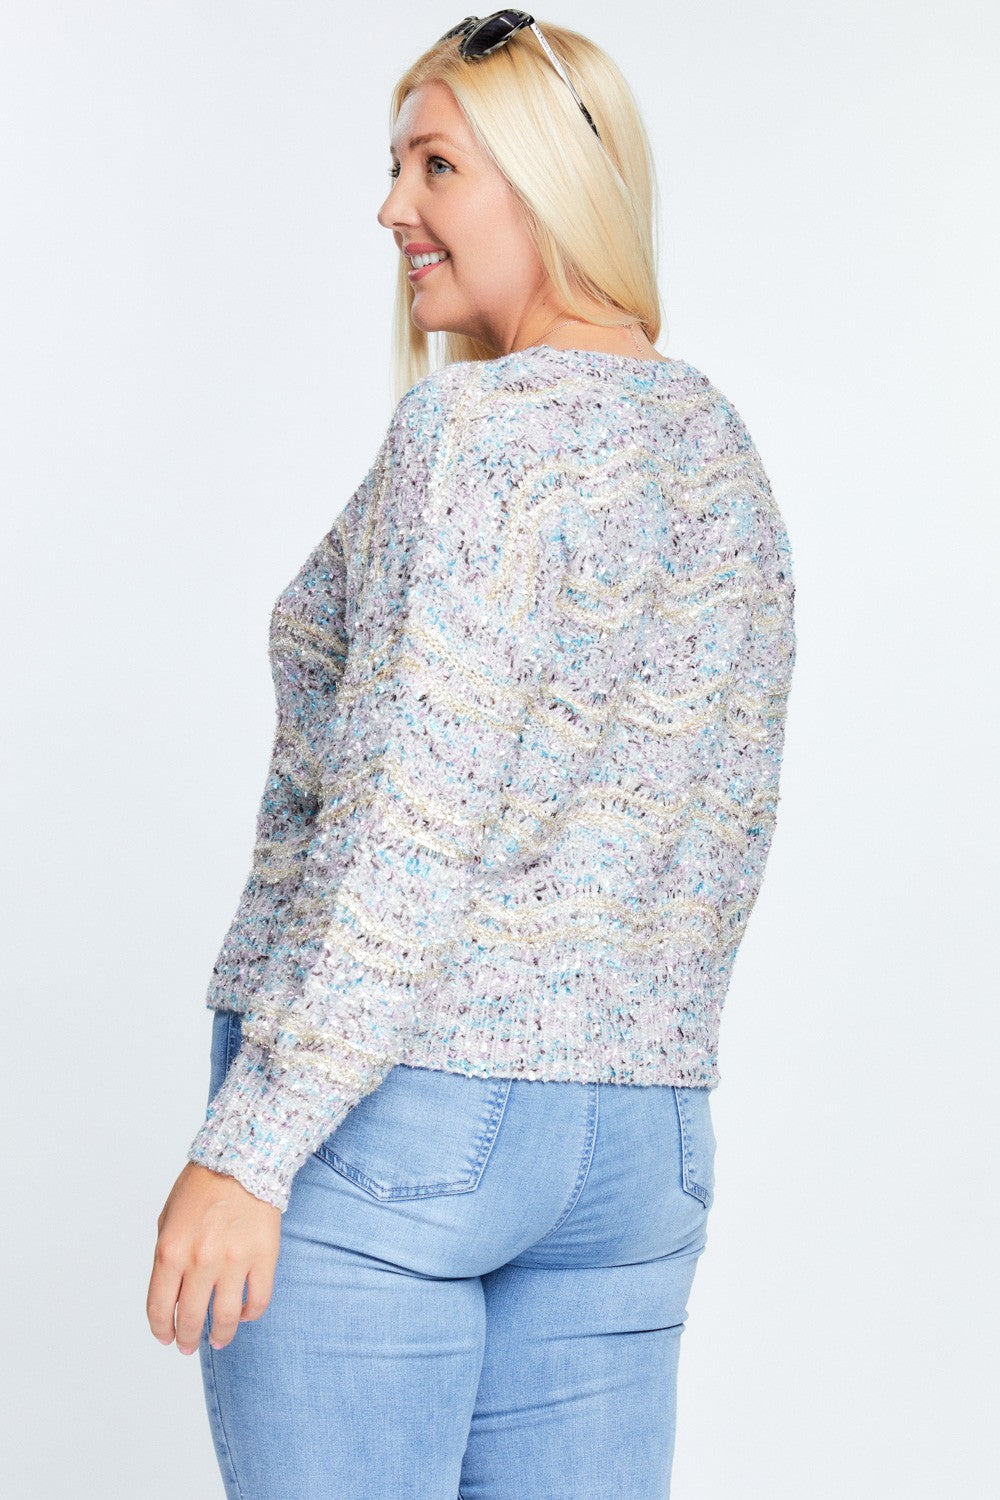 Multi Color Sweater